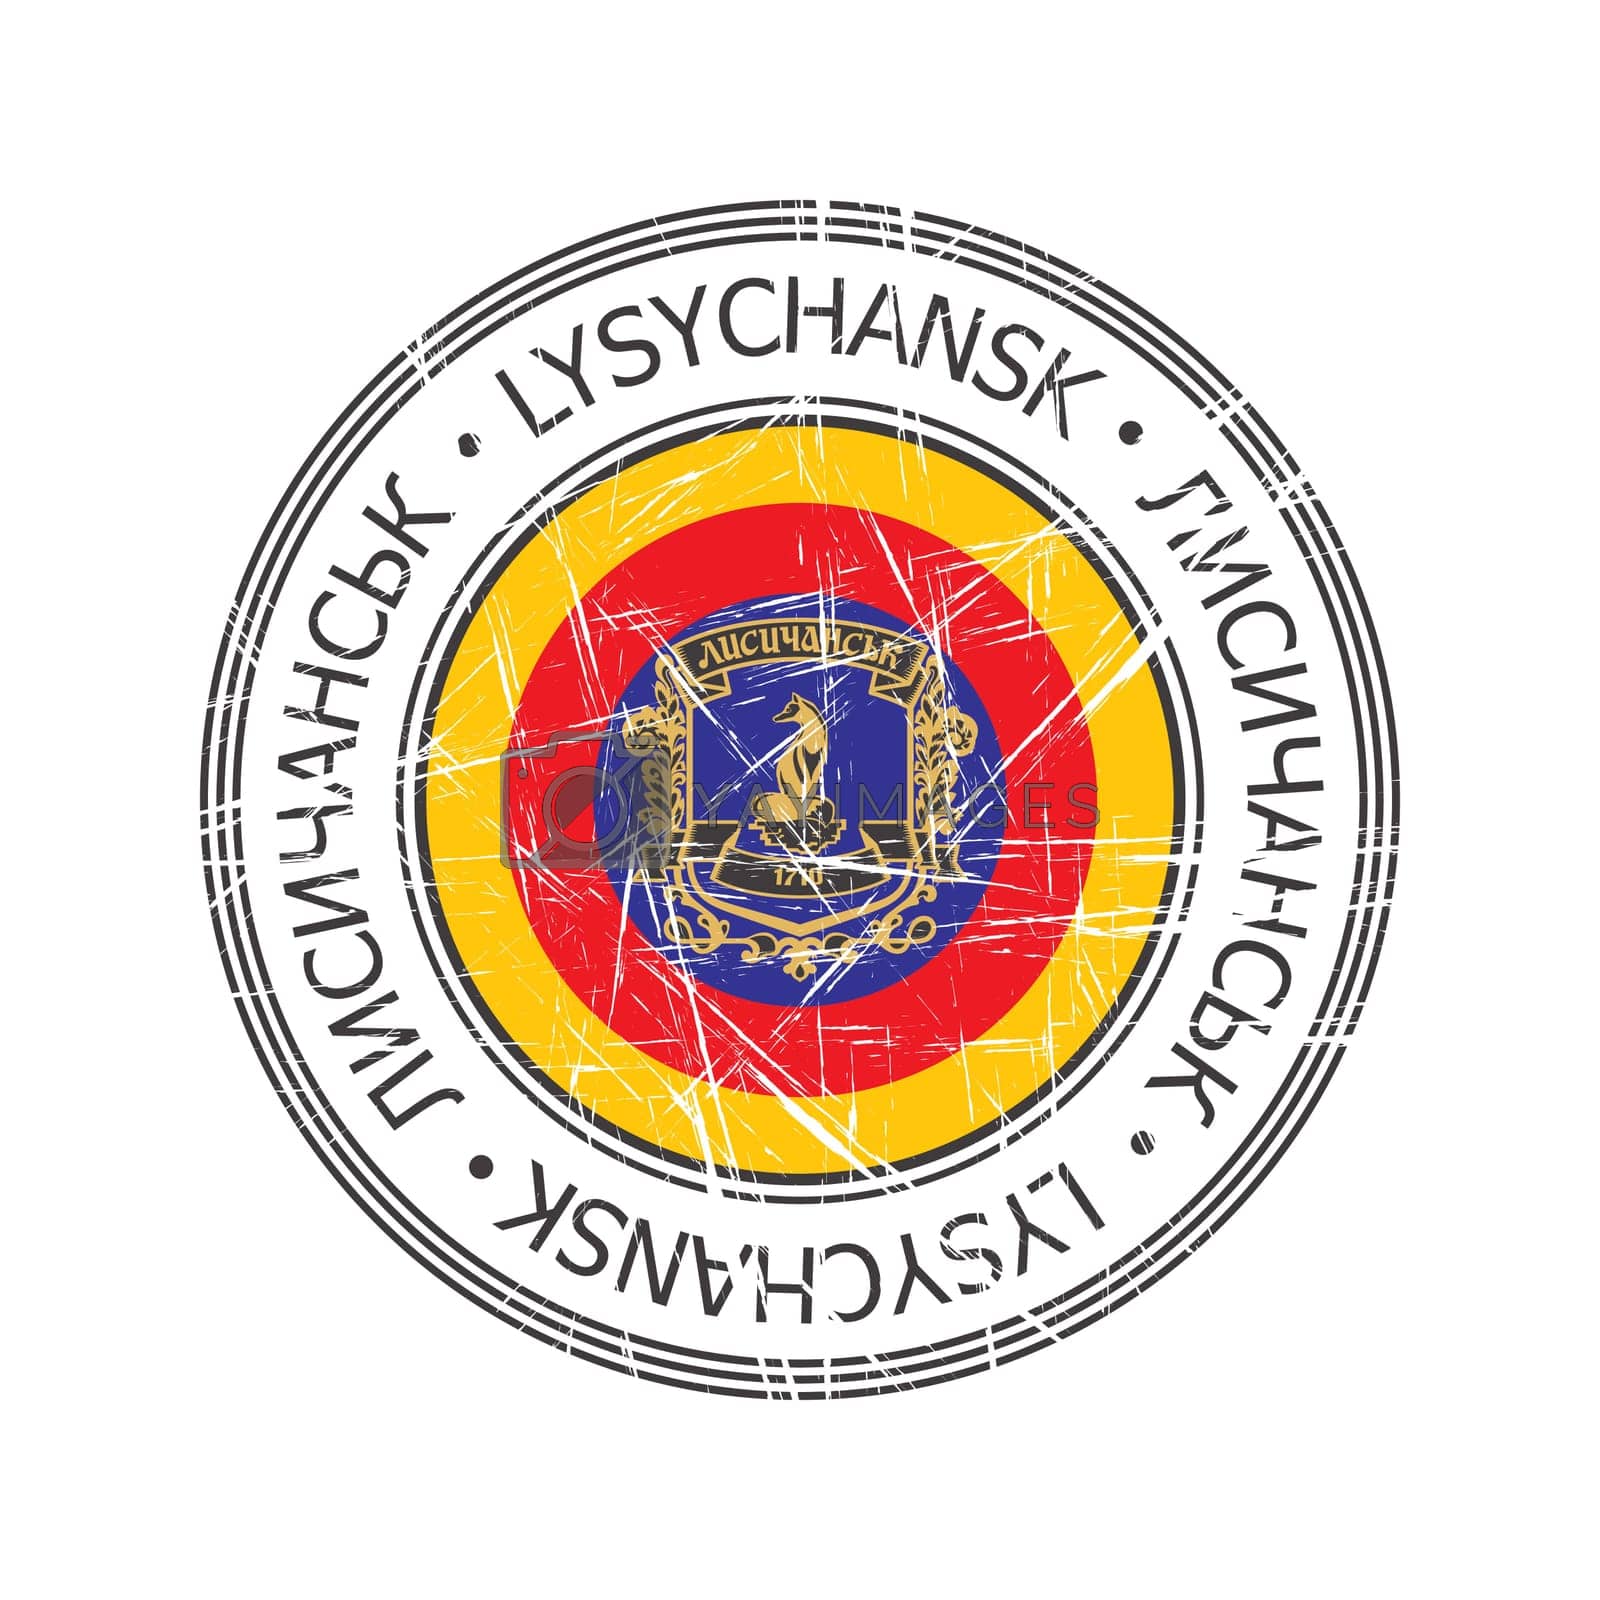 Royalty free image of Lysychansk Ukrainian city rubber stamp by Lirch